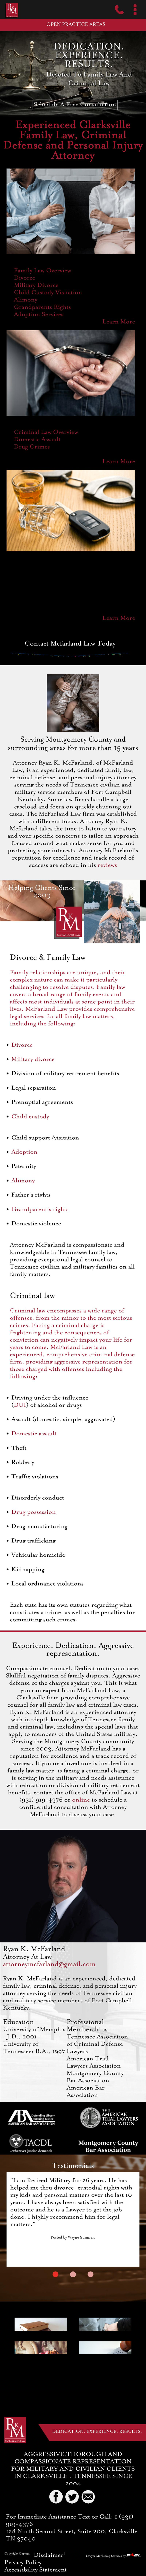 Ryan McFarland Law - Clarksville TN Lawyers